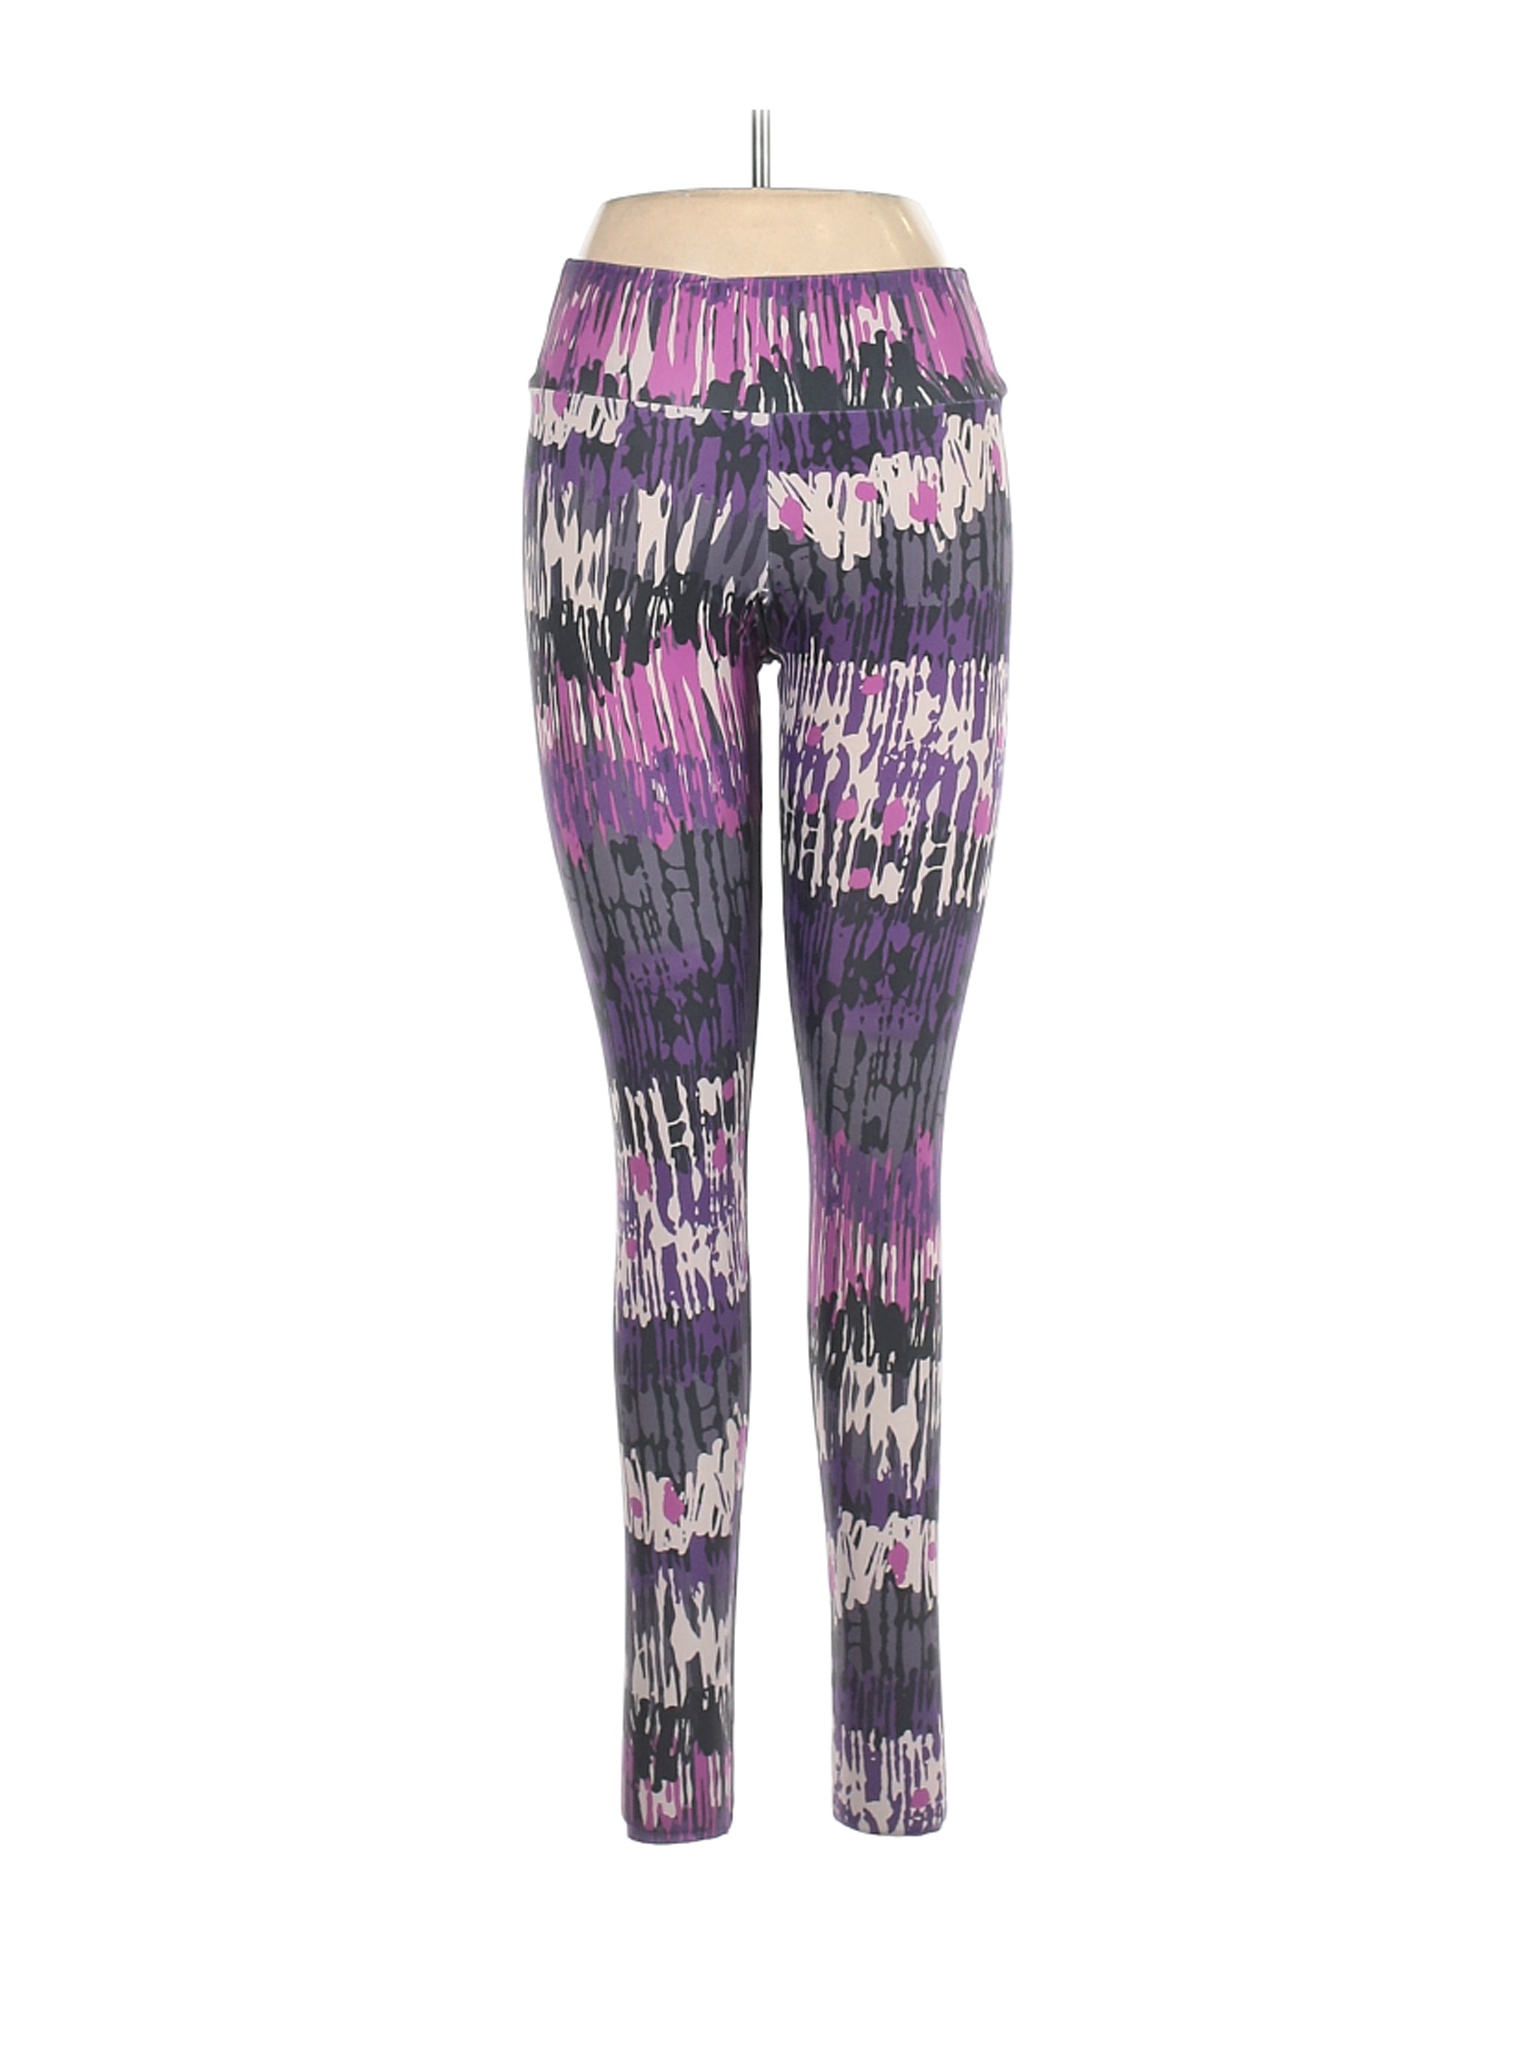 Unbranded Women Purple Leggings M | eBay